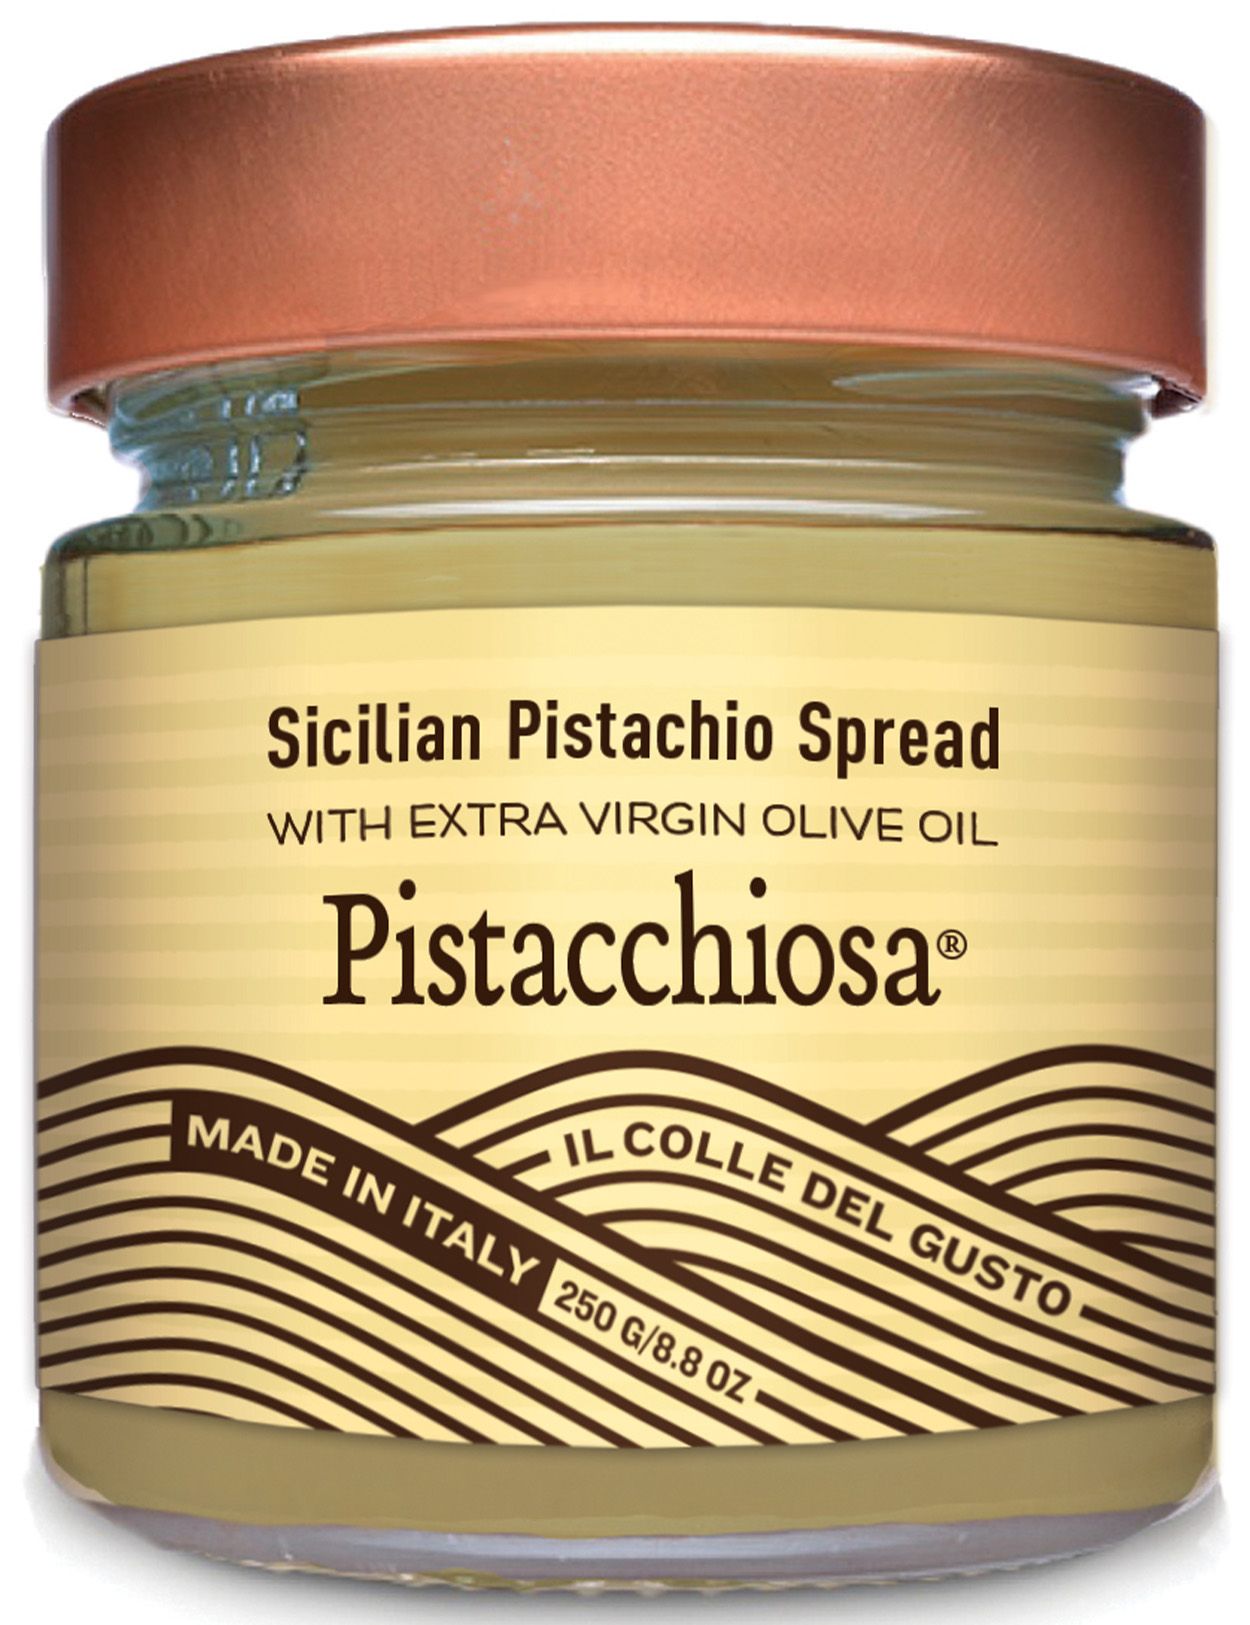 Pistacchiosa - Sicilian Pistachio Spread with Extra Virgin Olive Oil